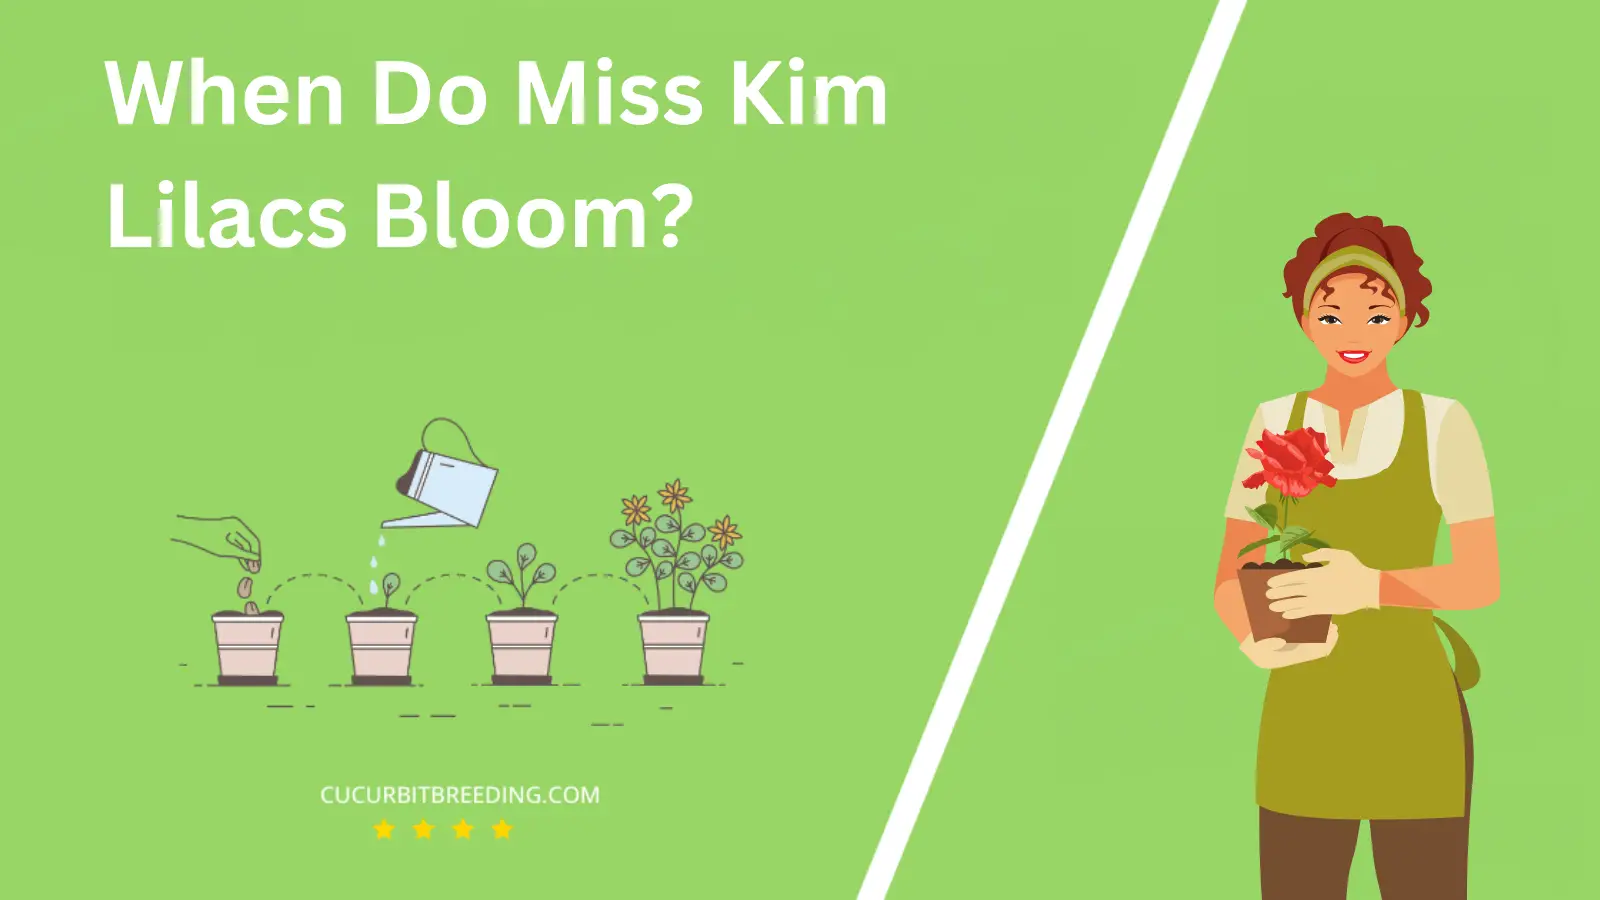 When Do Miss Kim Lilacs Bloom?